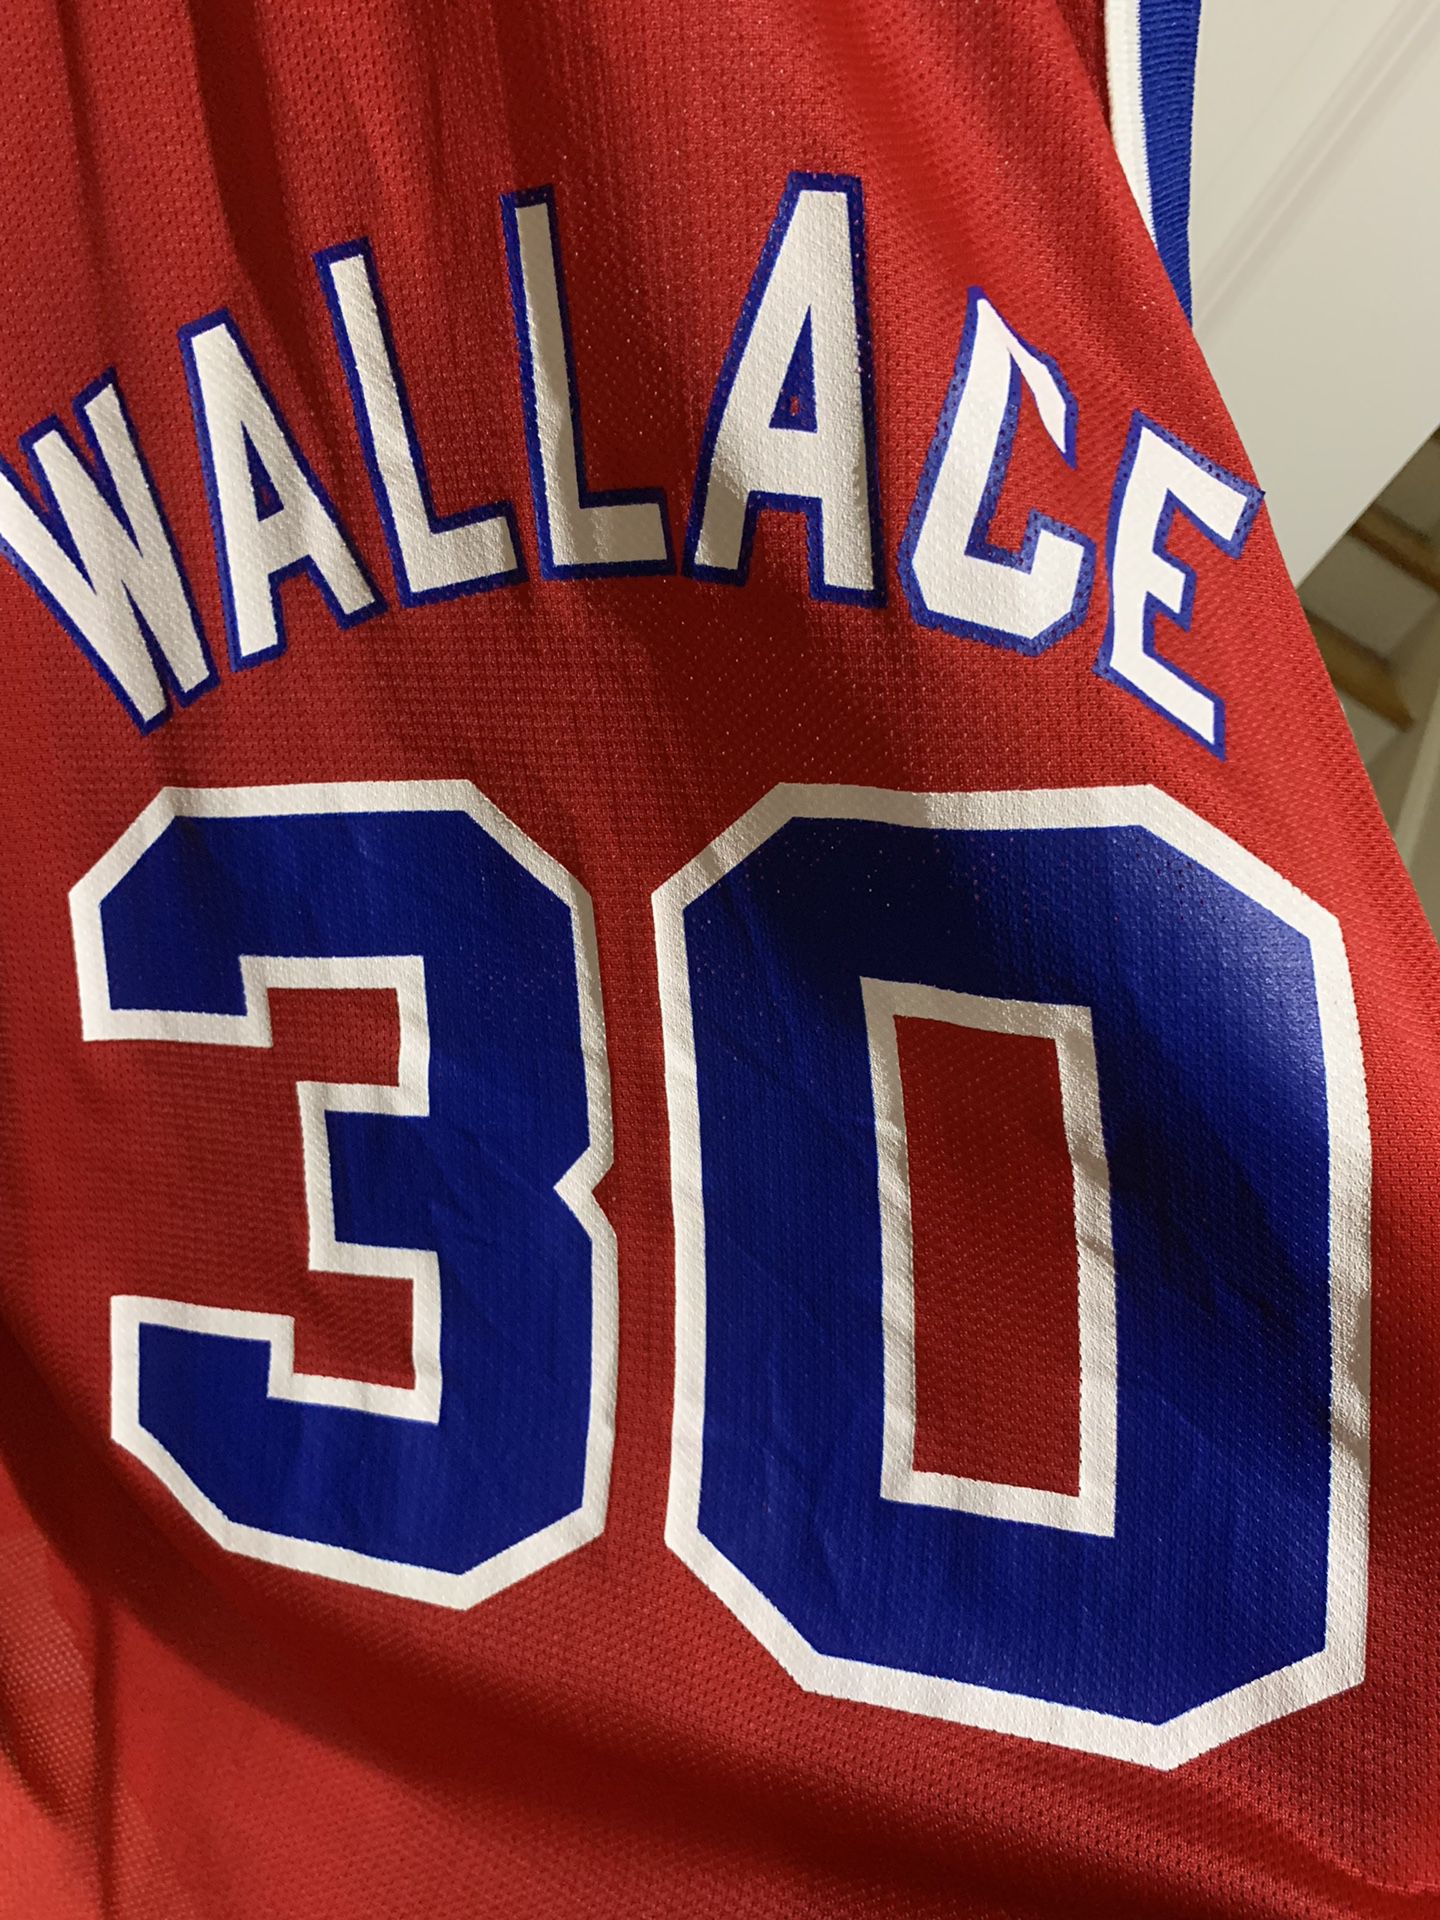 Washington Bullets: Rasheed Wallace 1995/96 Rookie Champion Jersey